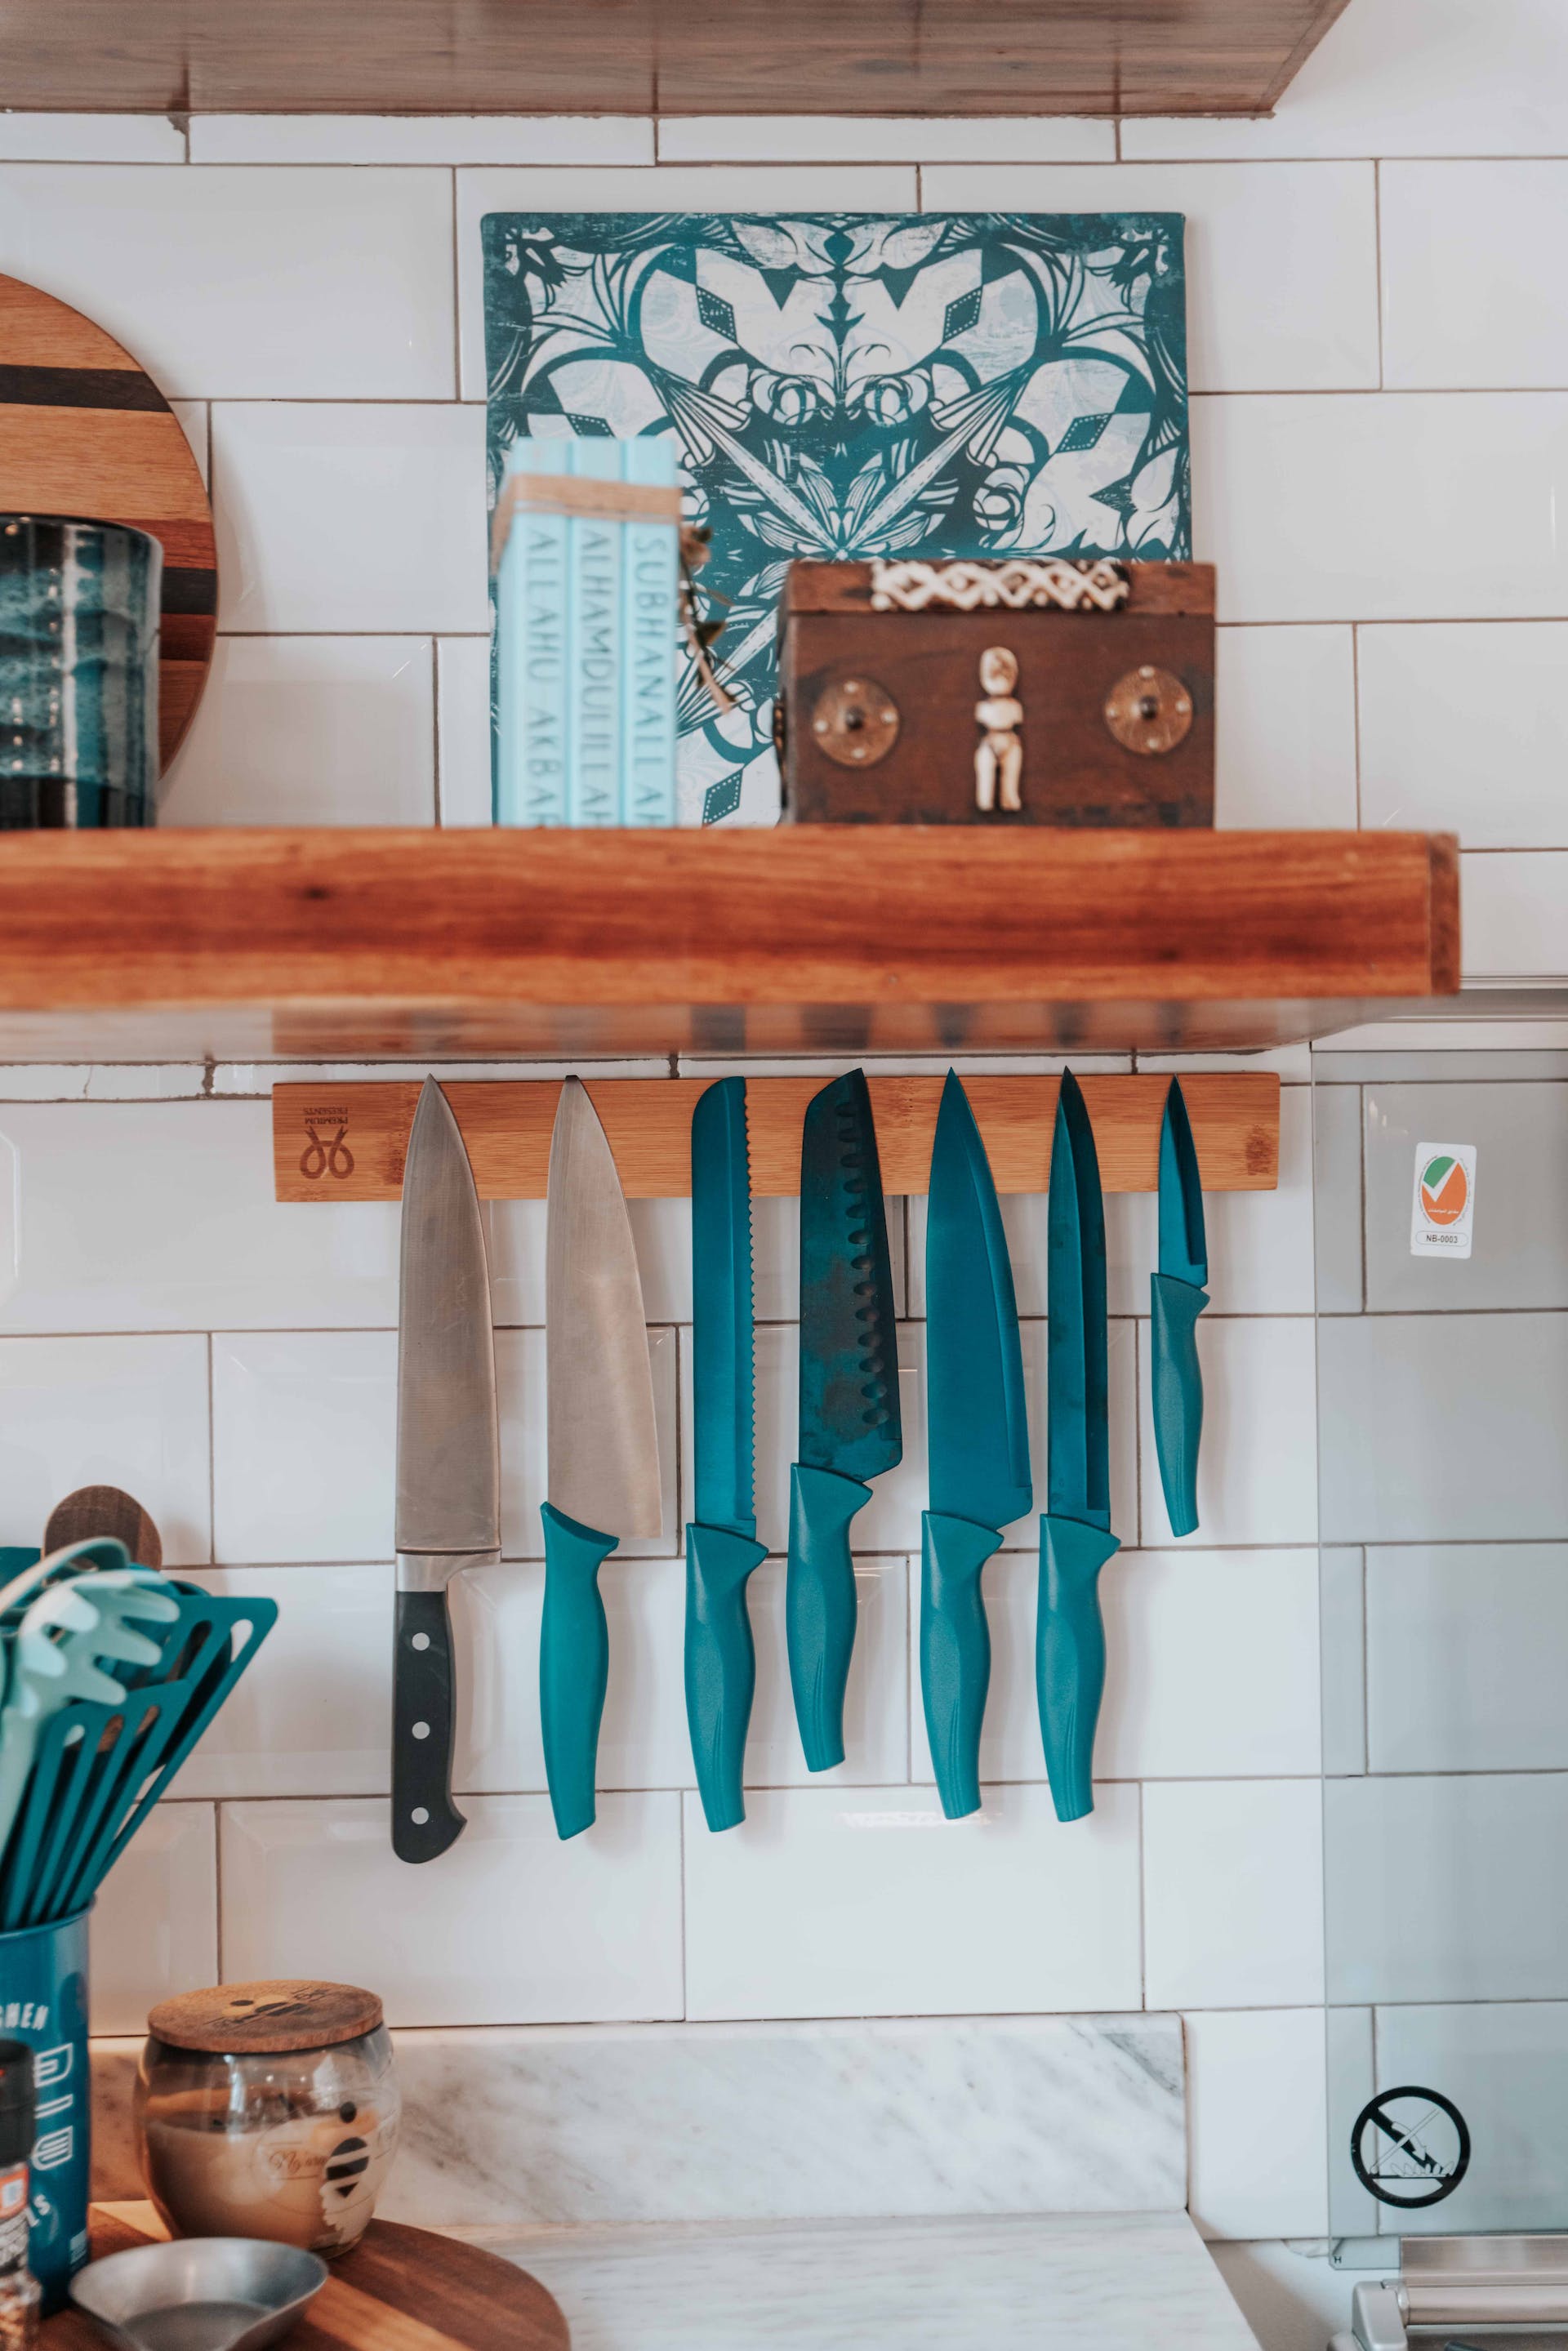 A set of kitchen knives | Source: Pexels